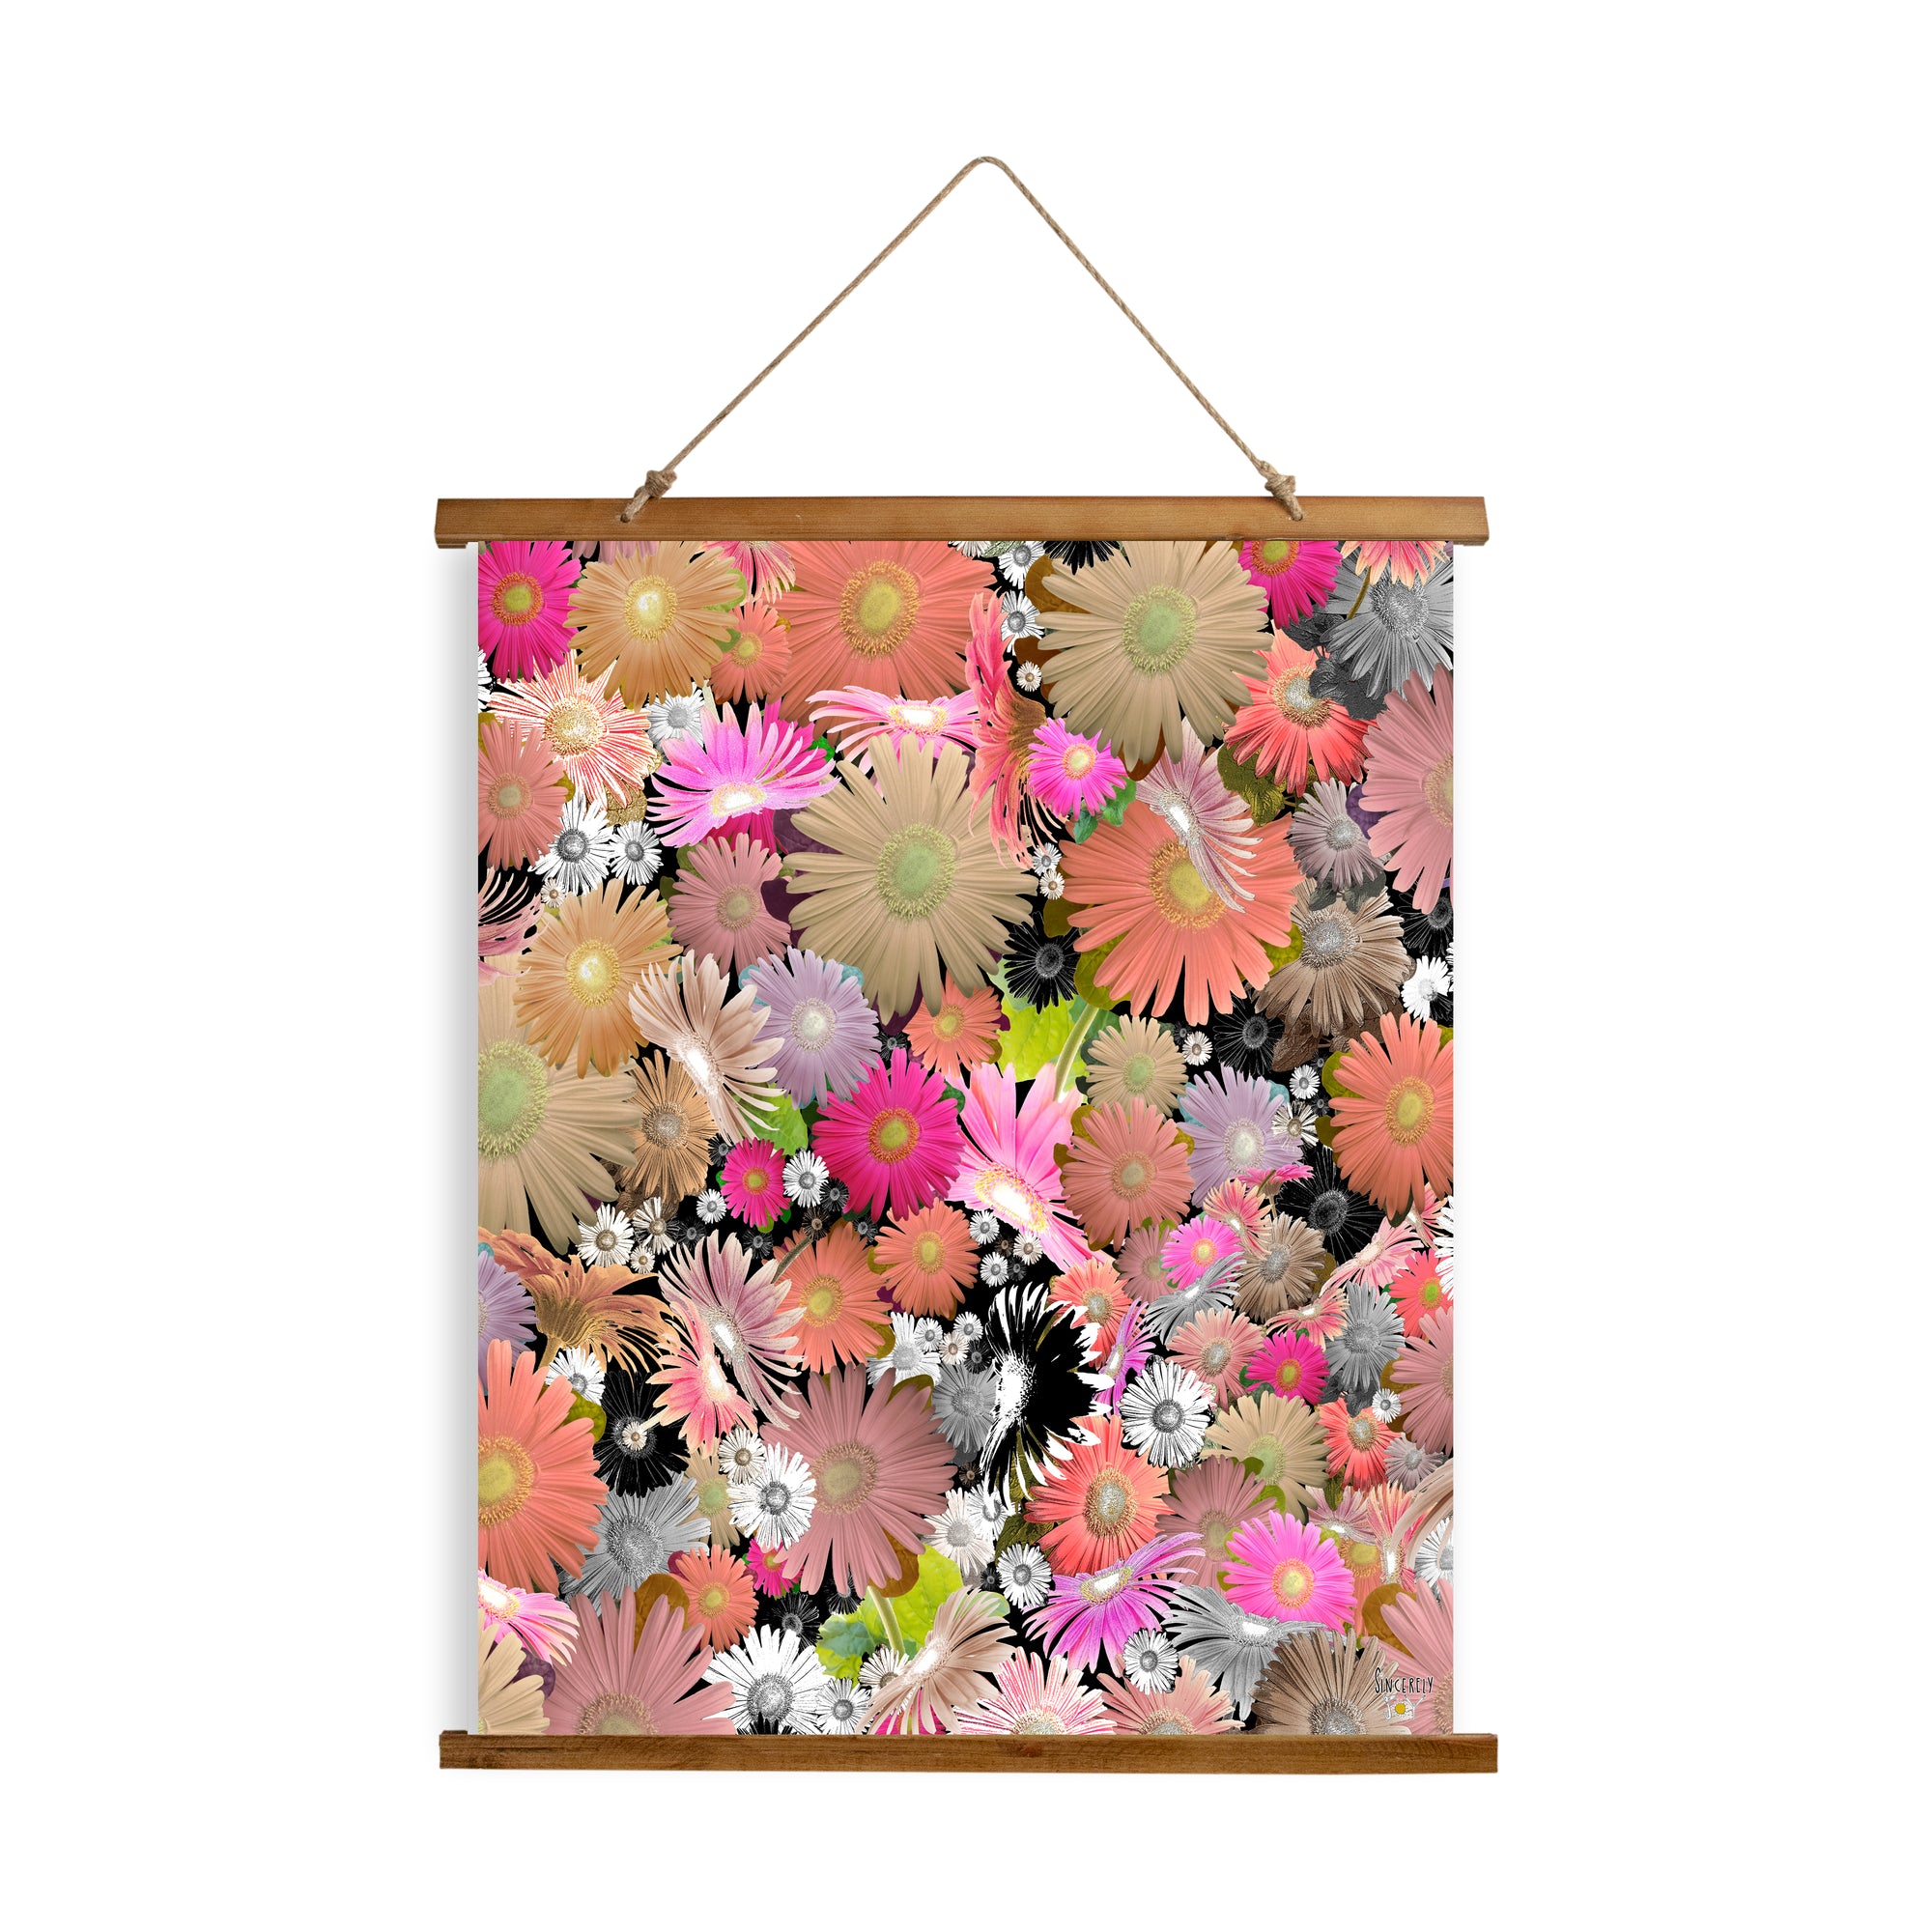 Whimsical Wood Slat Tapestry "C Floral"